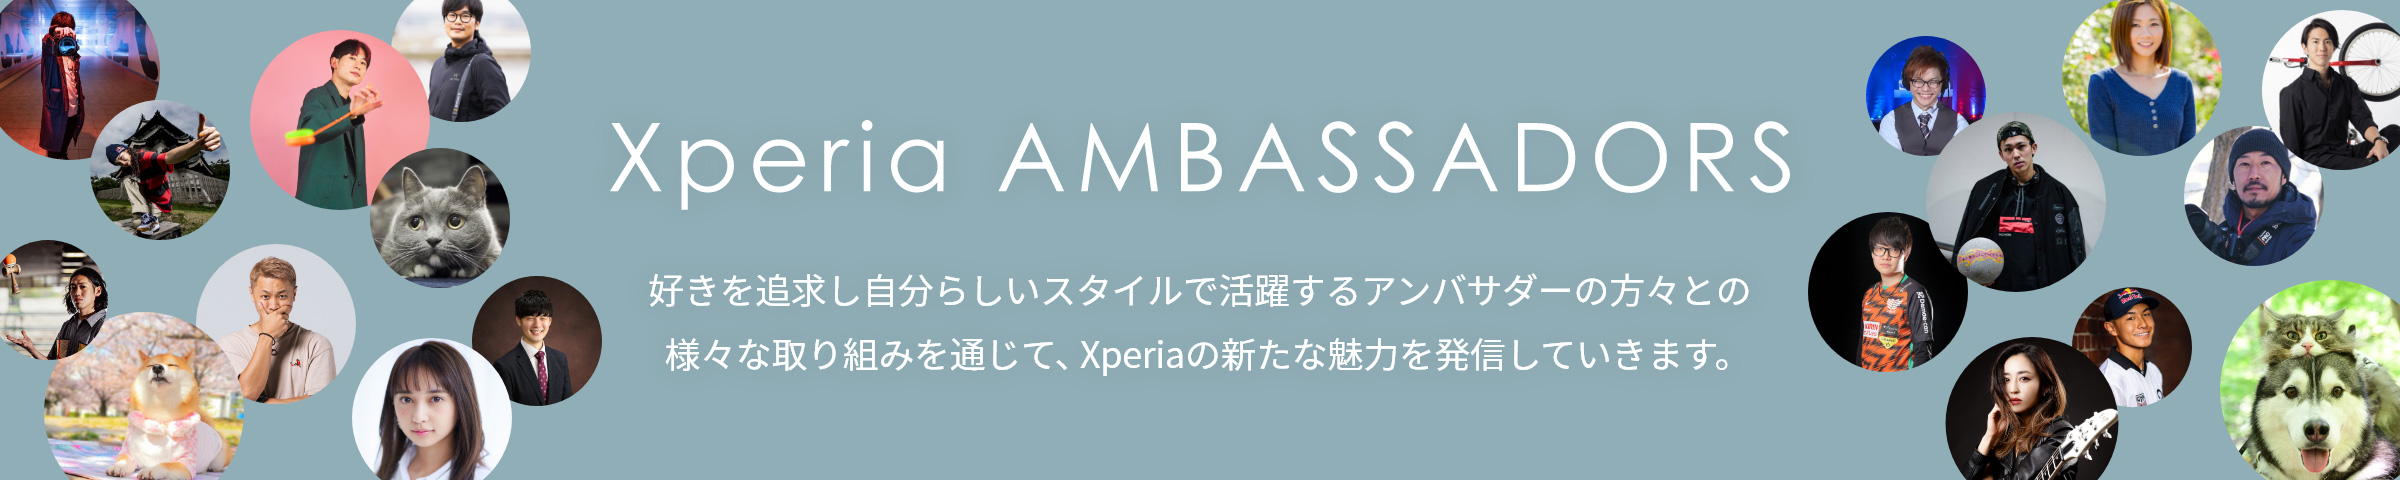 Xperia AMBASSADORS 好きを追求し自分らしいスタイルで活躍するアンバサダーの方々との様々な取り組みを通じて、Xperiaの新たな魅力を発信していきます。